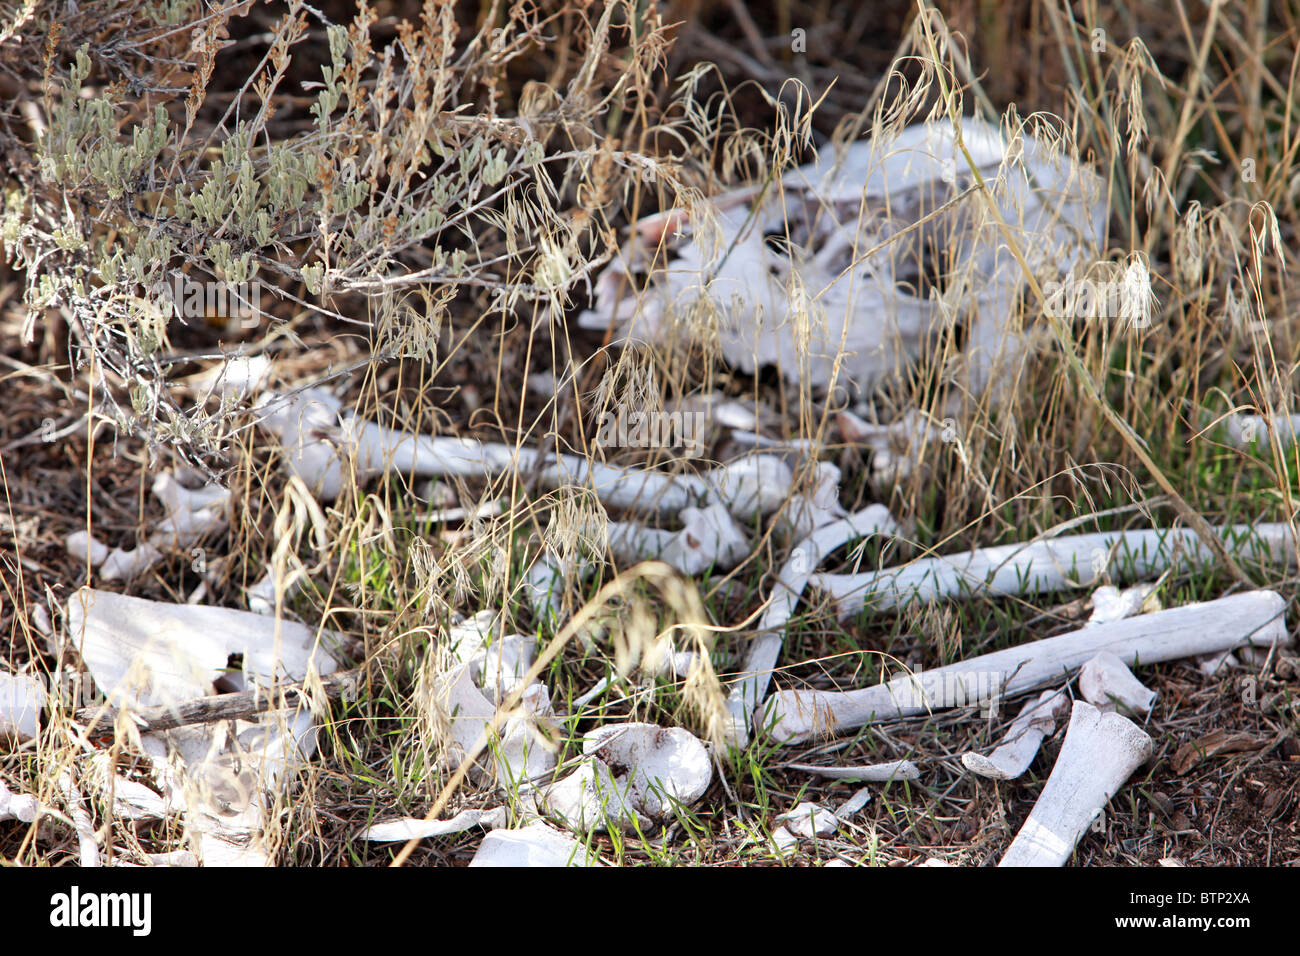 Bones of dead deer animal in dry grass. Skull and decayed bones bleached by sun. Deer animal dead. Stock Photo